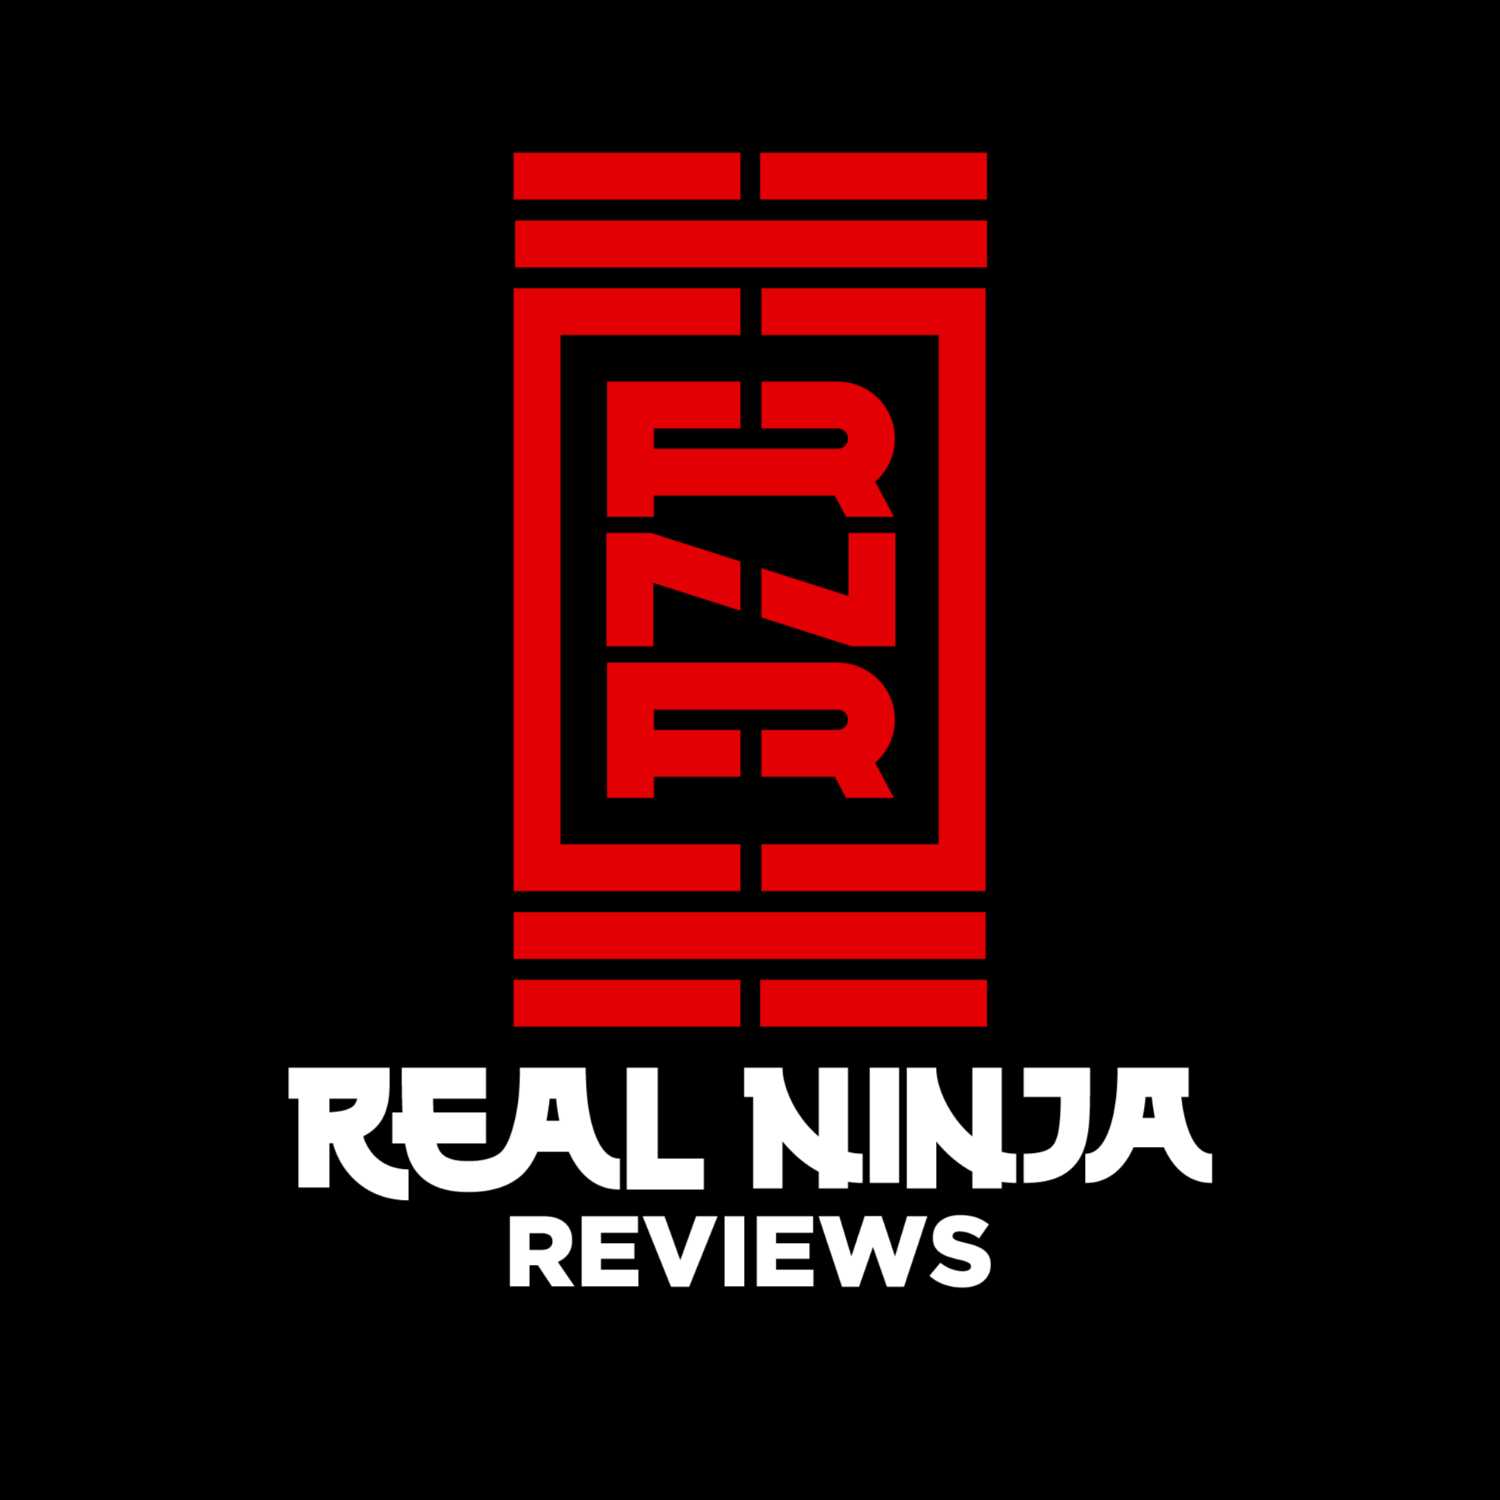 Real Ninja Reviews